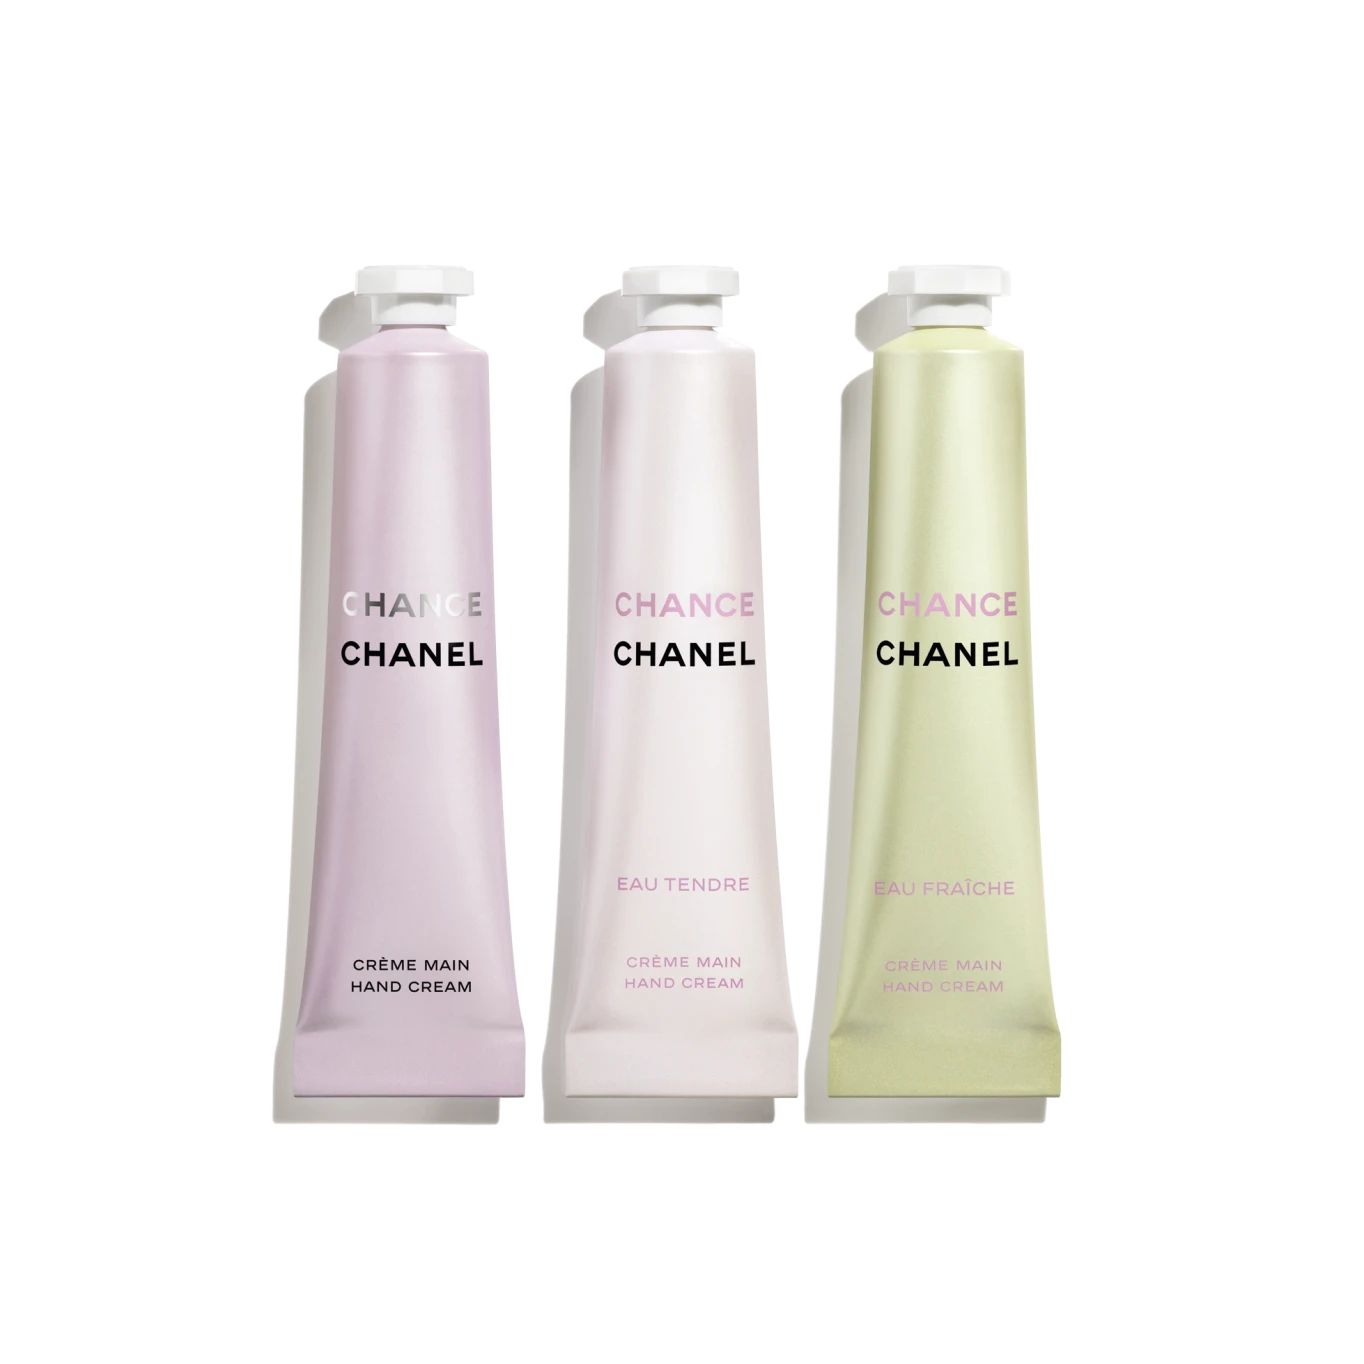 CHANCE | Chanel, Inc. (US)